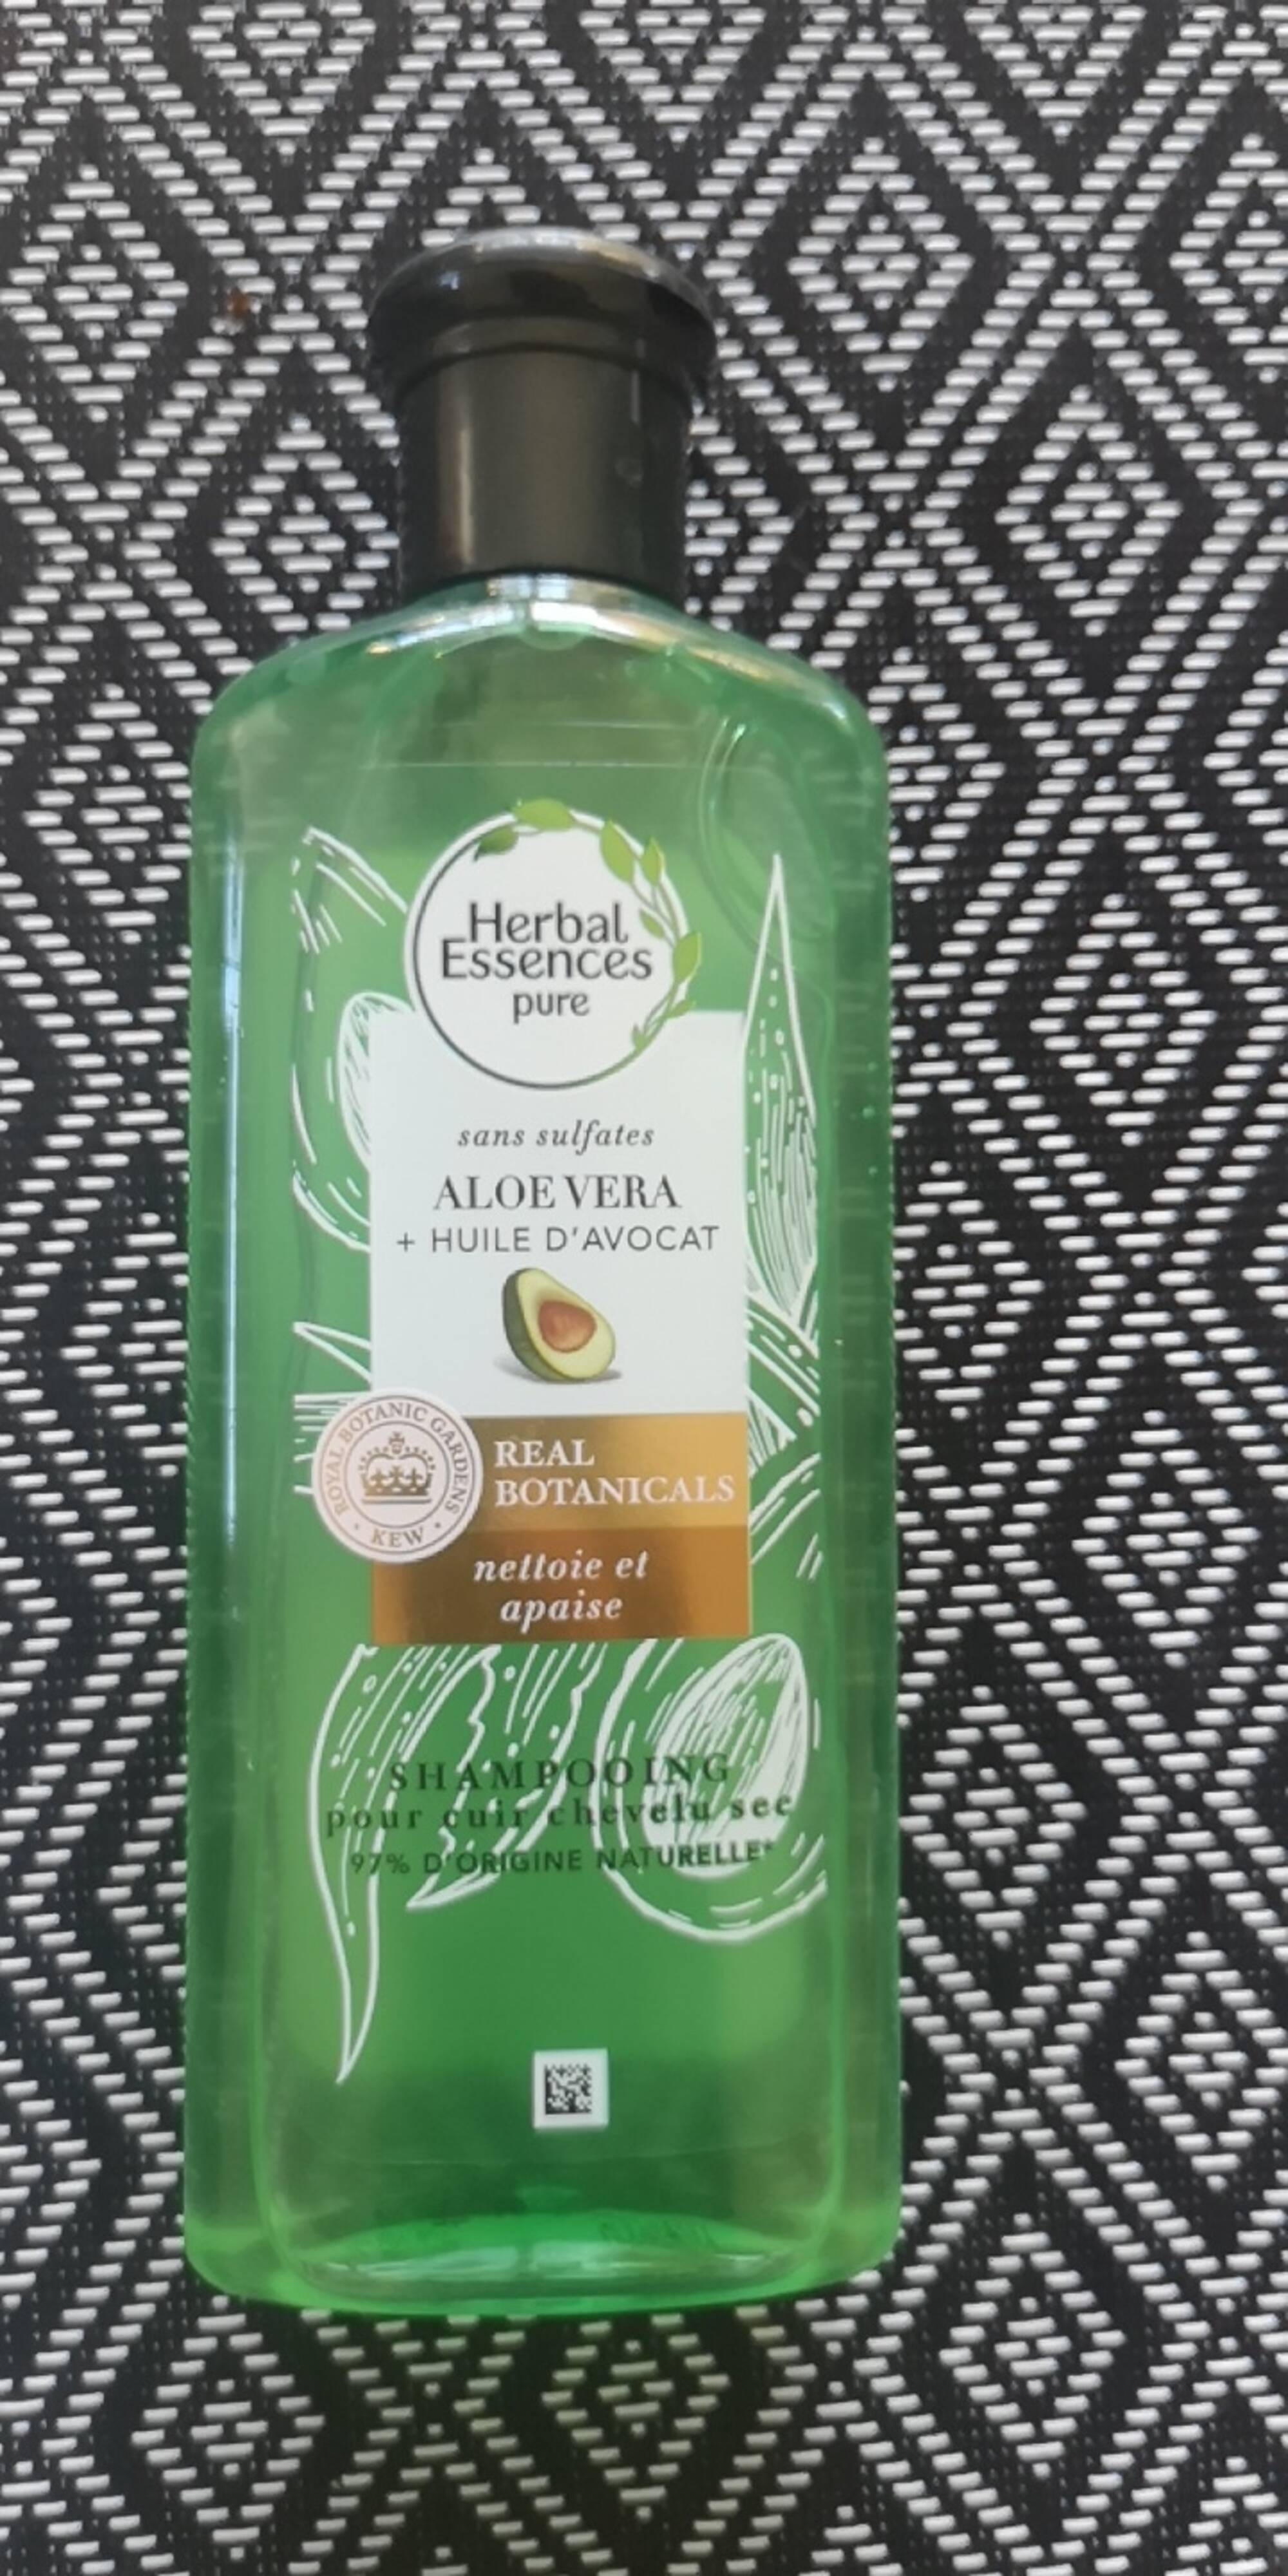 HERBAL ESSENCES - Aloe vera + huile d'avocat - Shampooing